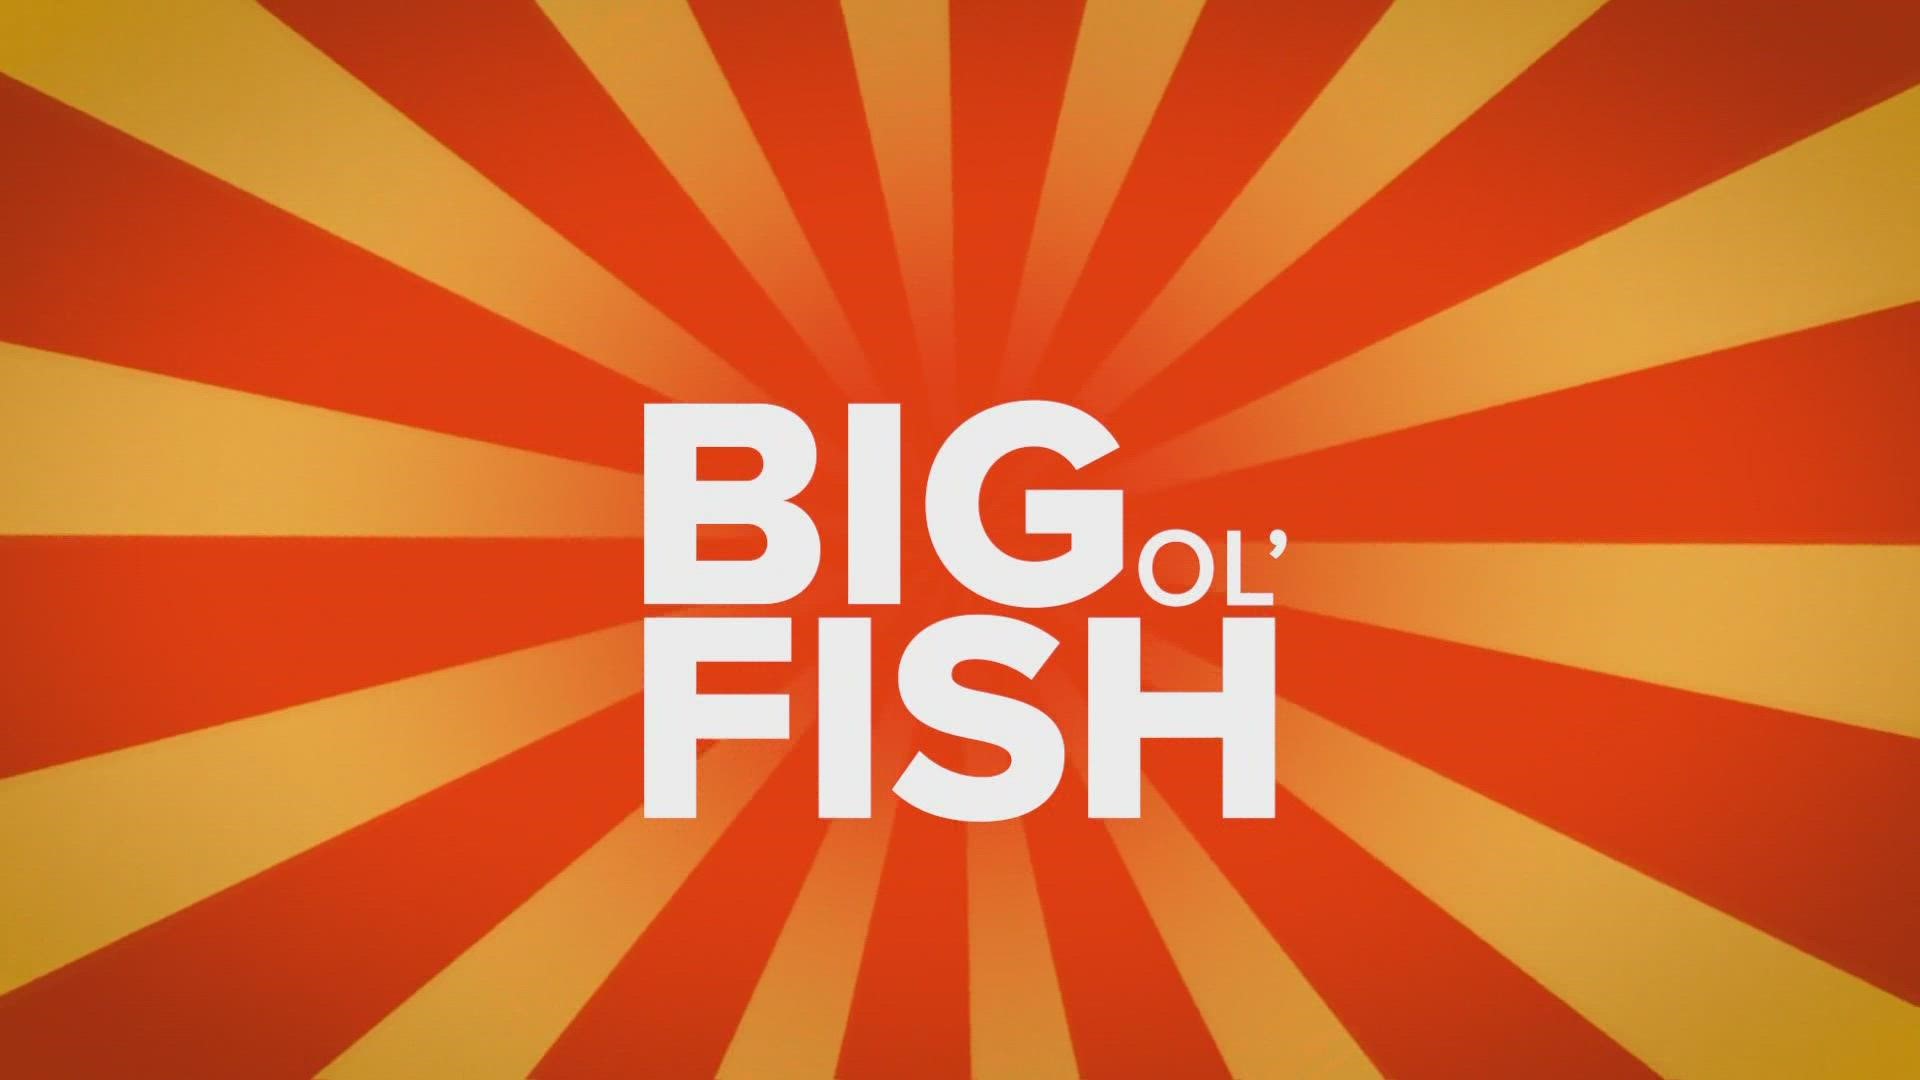 Big Ol' Fish on Saturday, Jan. 7